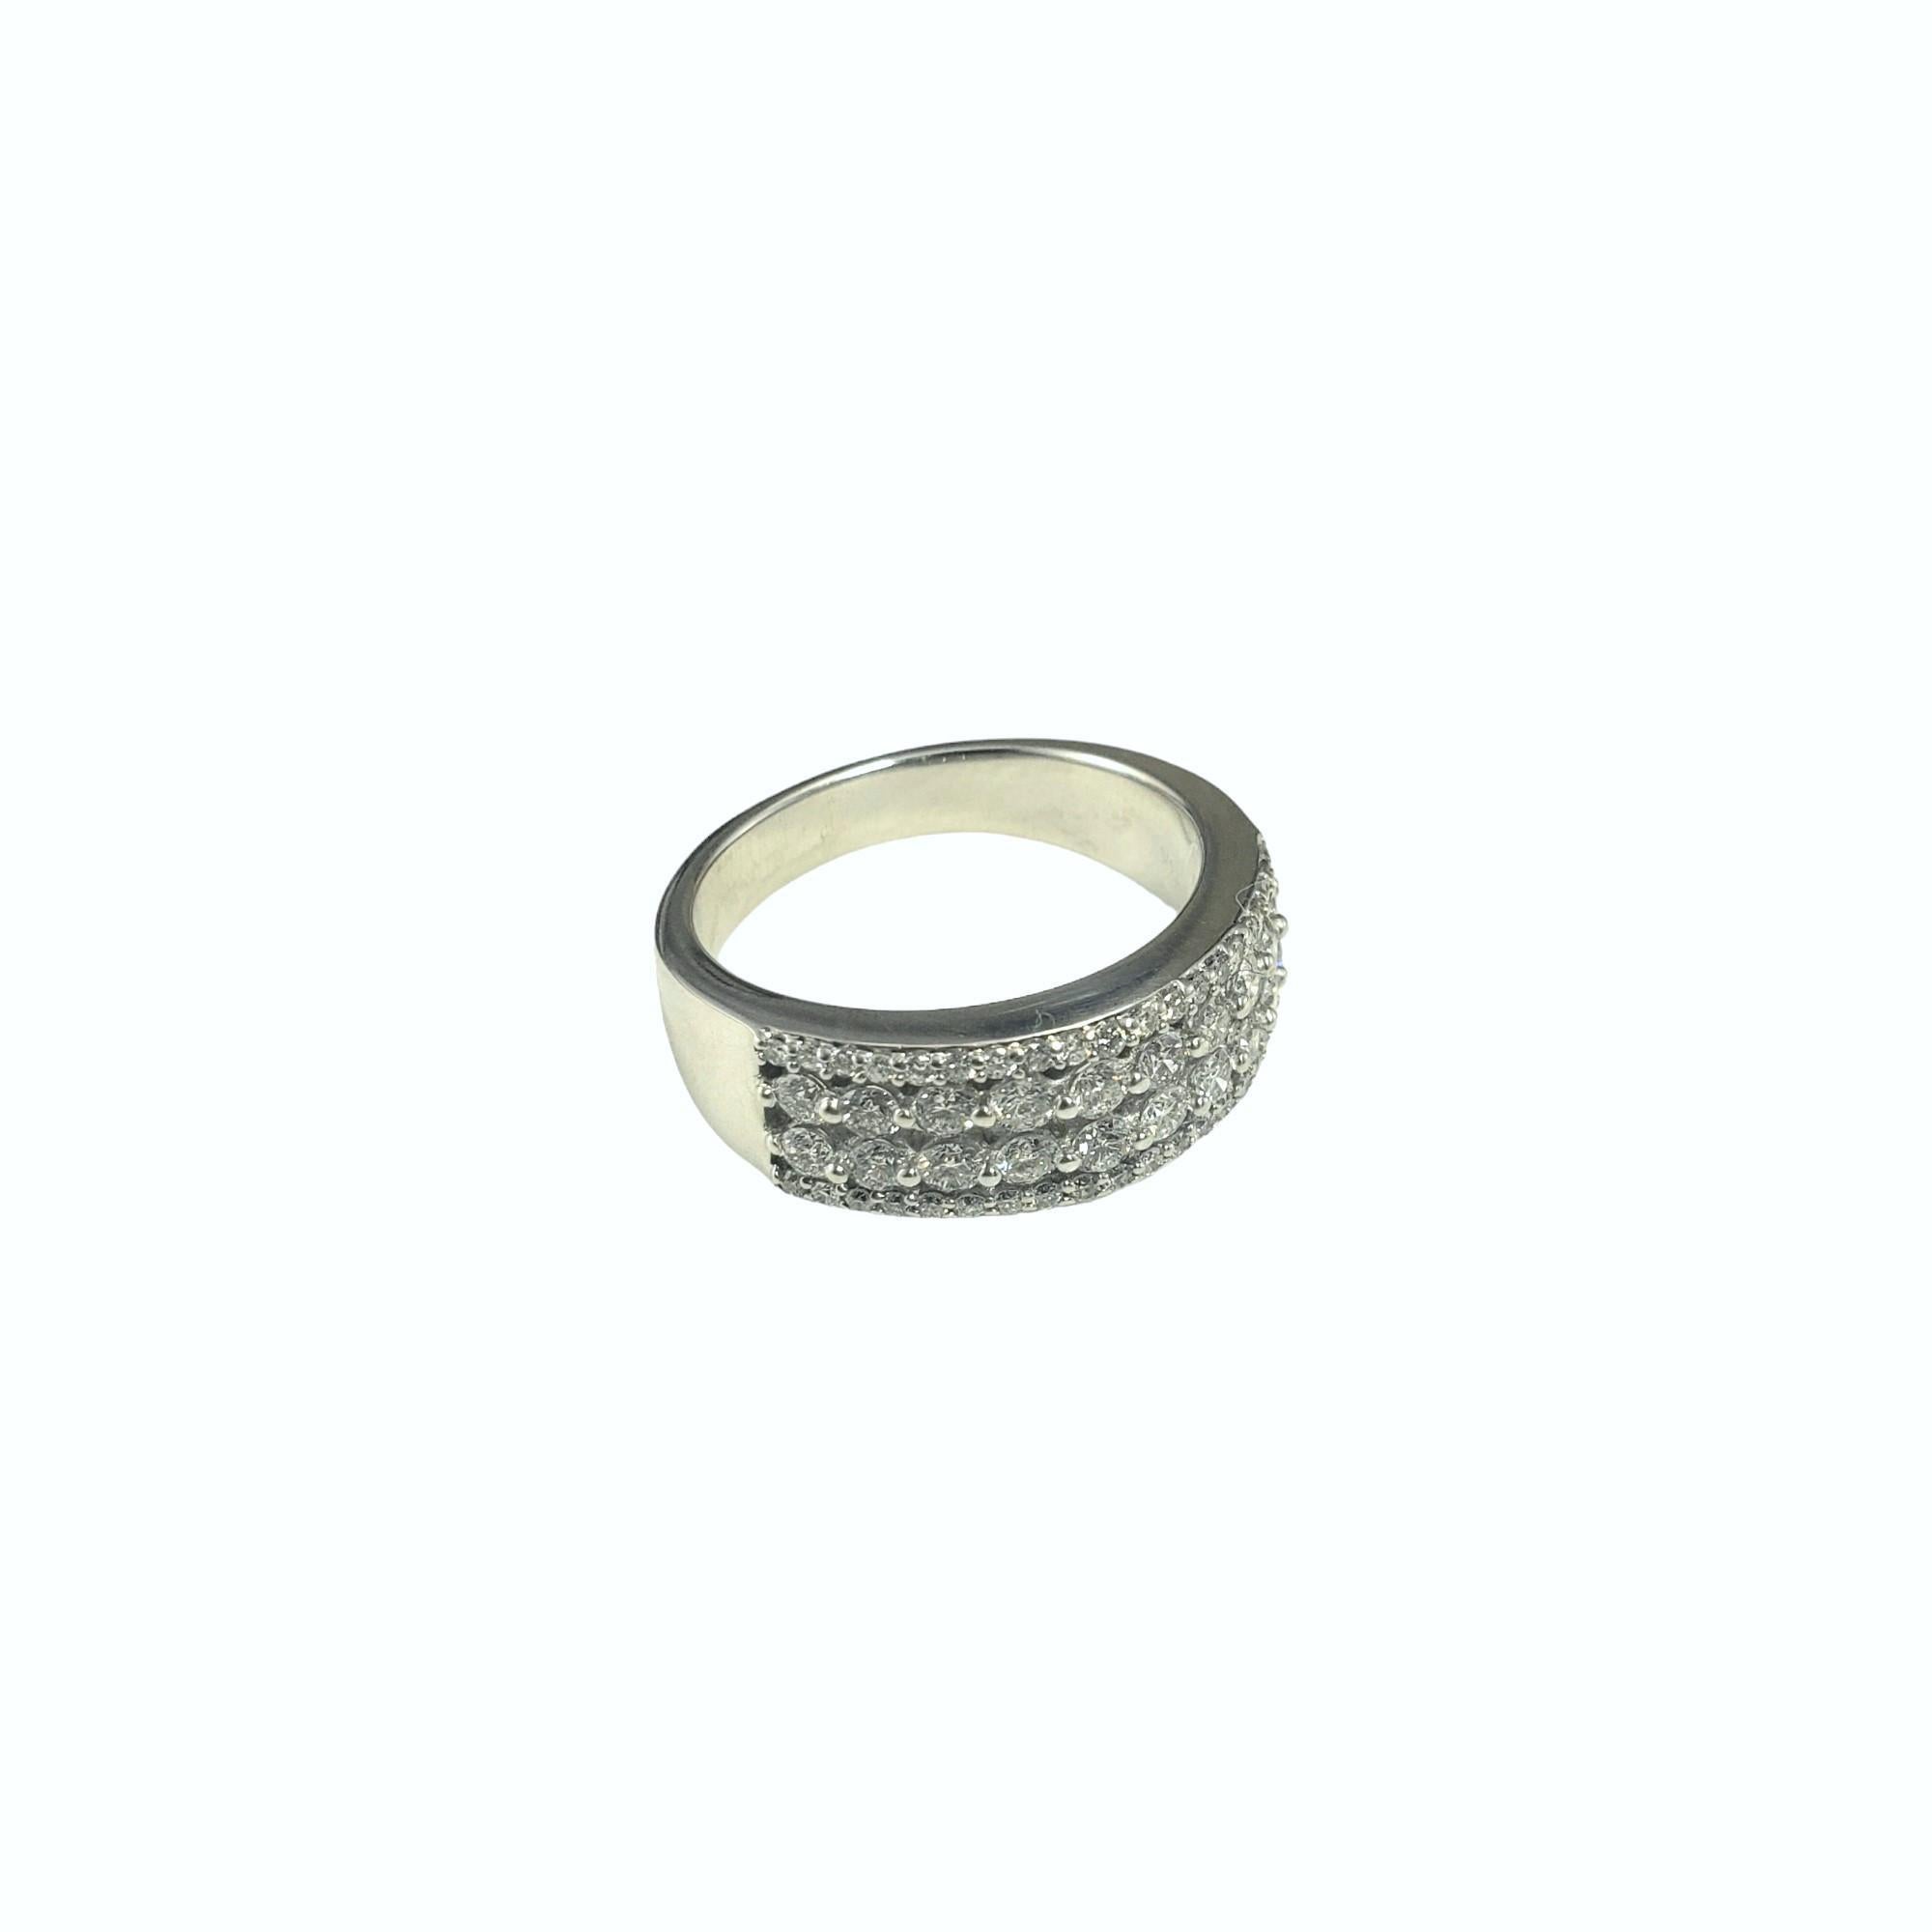 Brilliant Cut 14 Karat White Gold Diamond Band Ring Size 7-7.25 #16828 For Sale